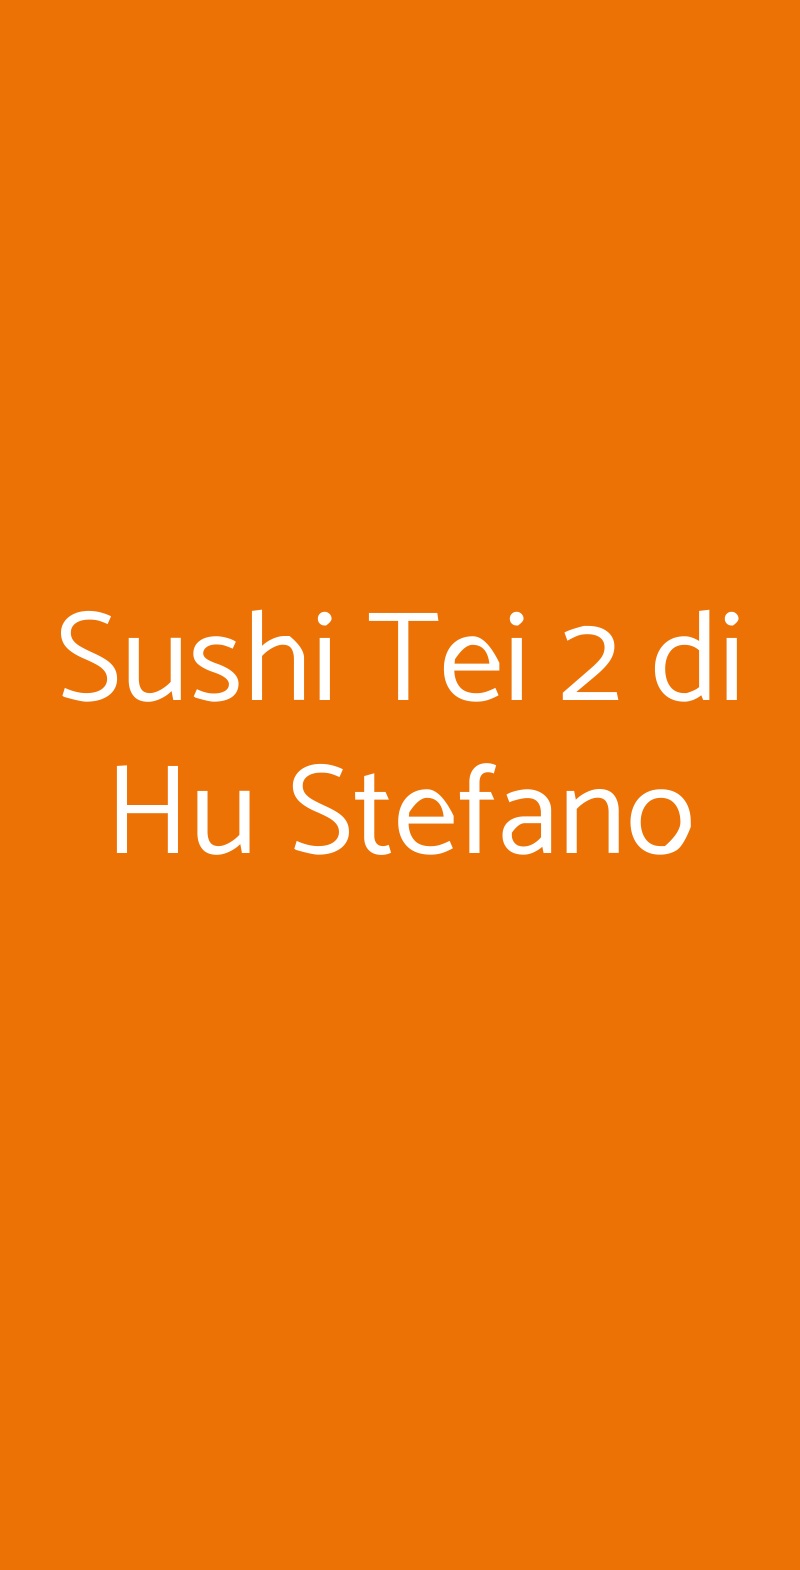 Sushi Tei 2 di Hu Stefano Torino menù 1 pagina